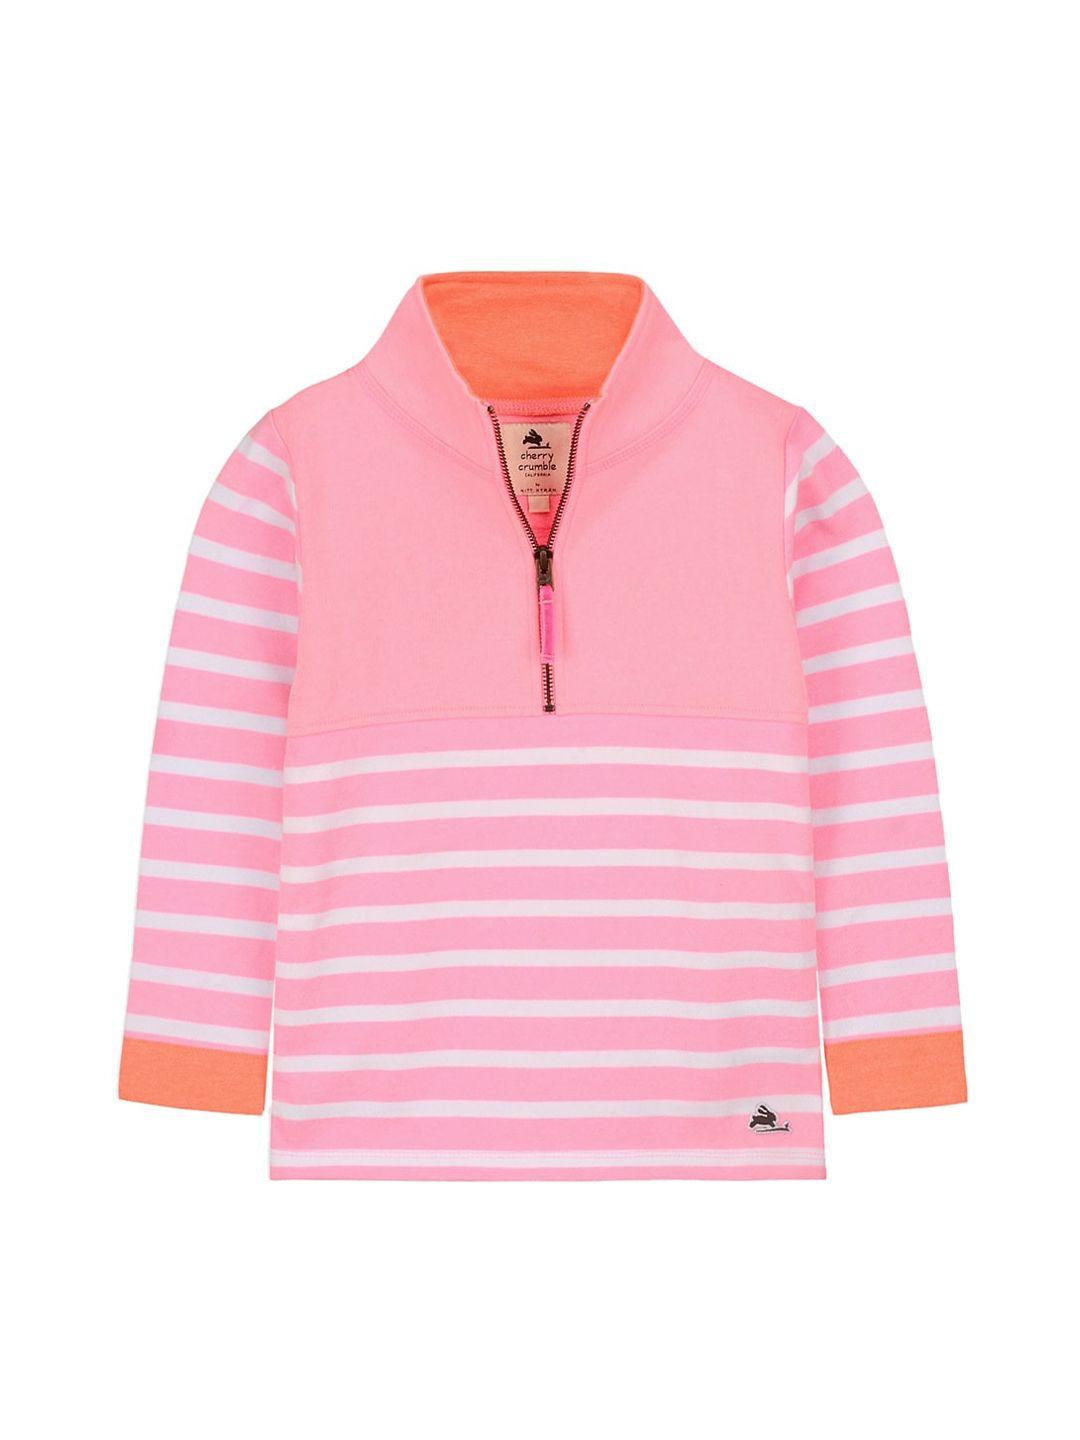 cherry crumble kids pink striped sweatshirt